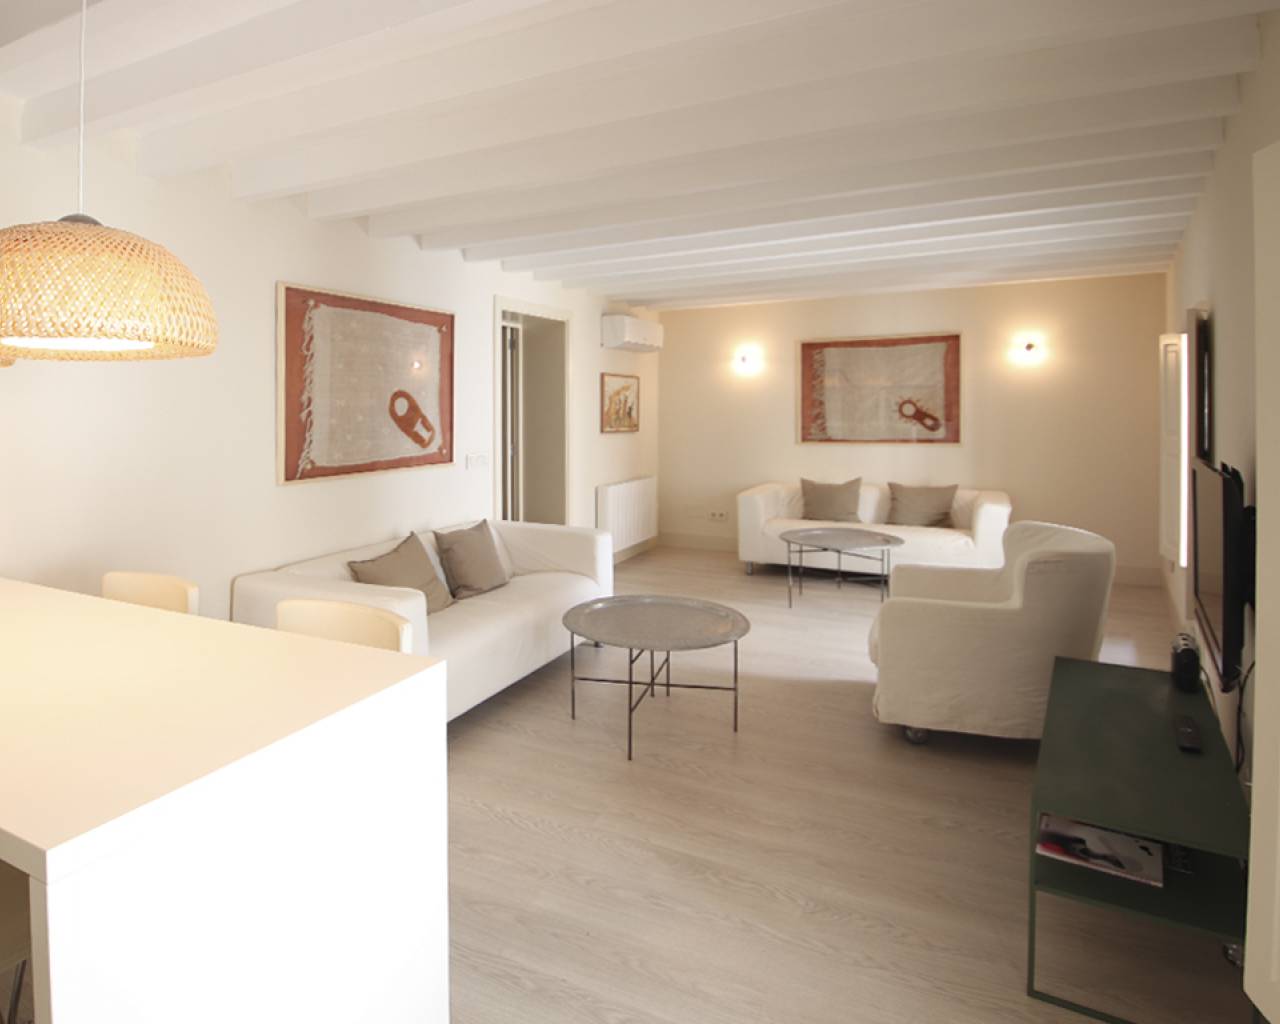 Flat for rent in Palma de Mallorca